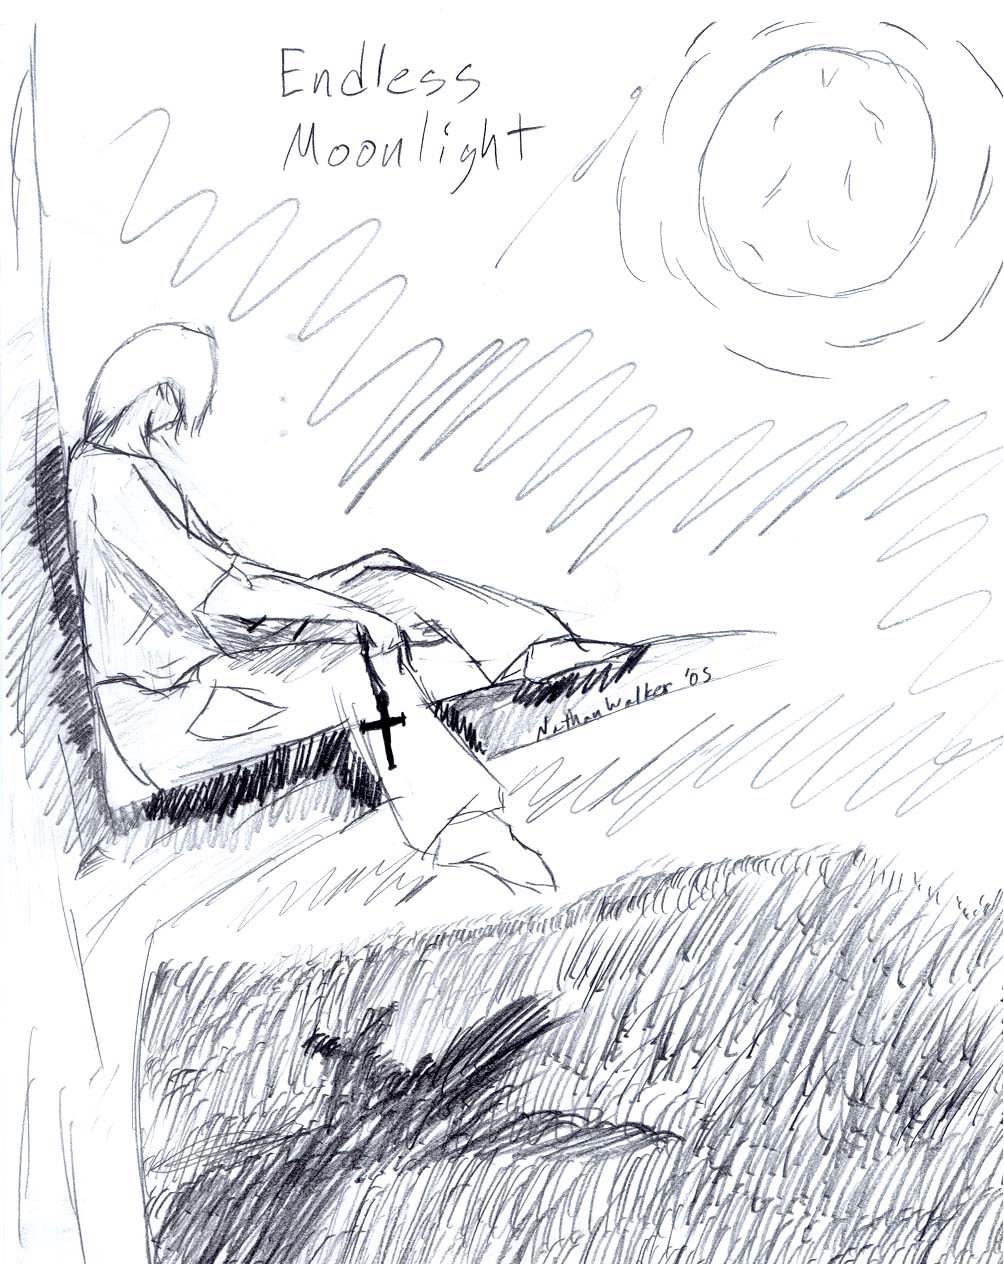 *Endless Moonlight* by nhwalker89